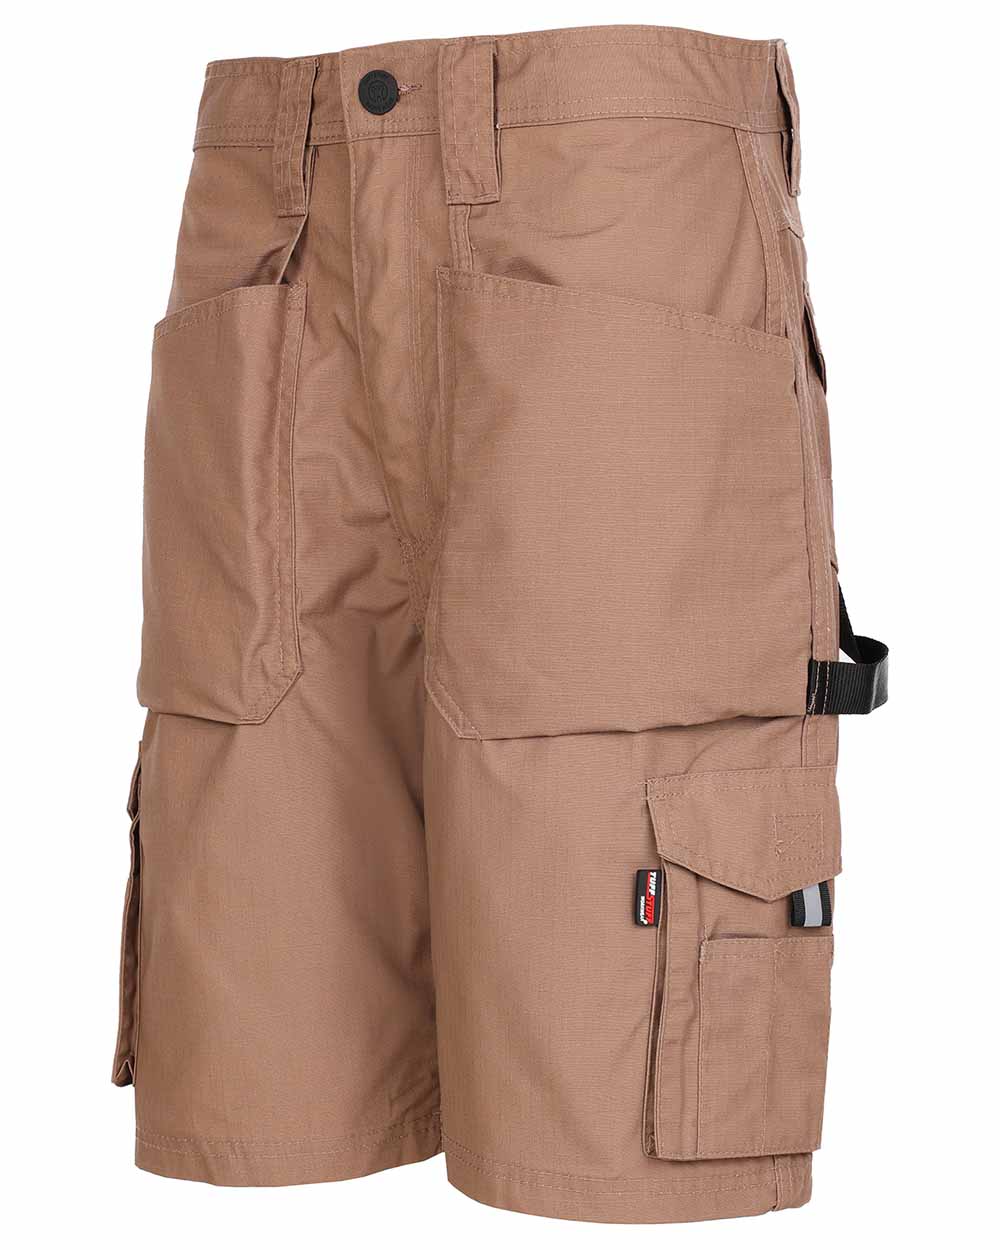 Large side pockets Tuffstuff Enduro Work Shorts in Sand 